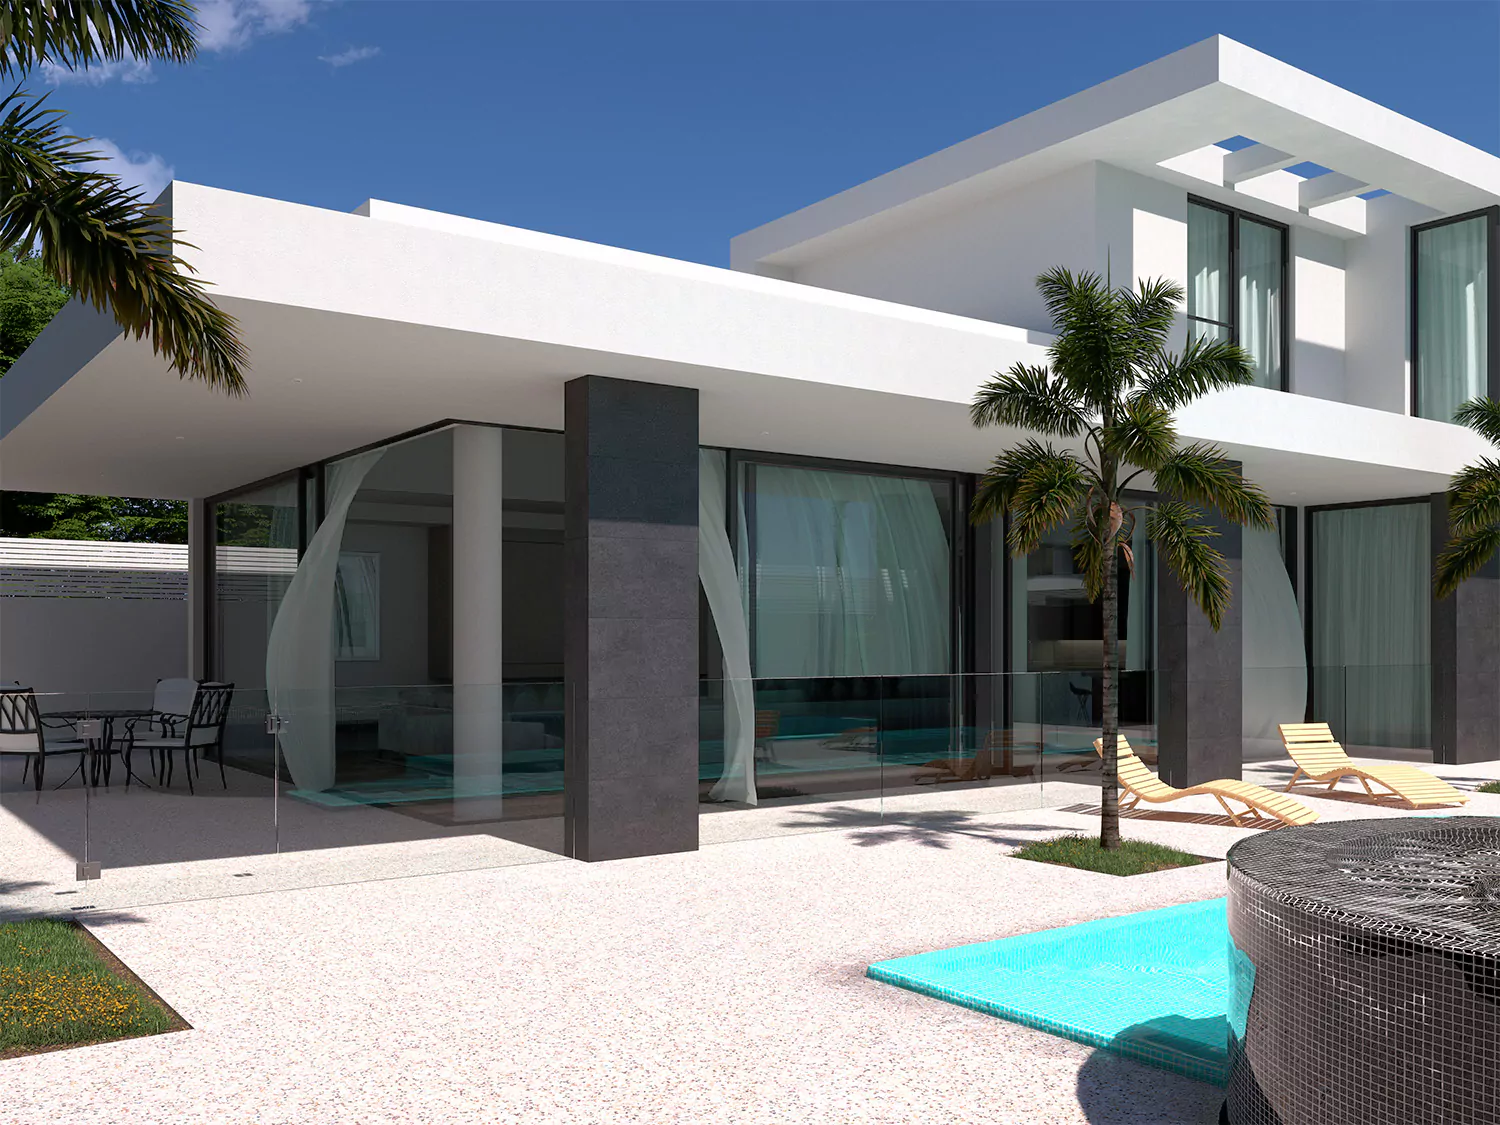 exterior-1-resort-house-cgi-interior-cgi-francos-and-costa-architectural-visualisation-agency - webp